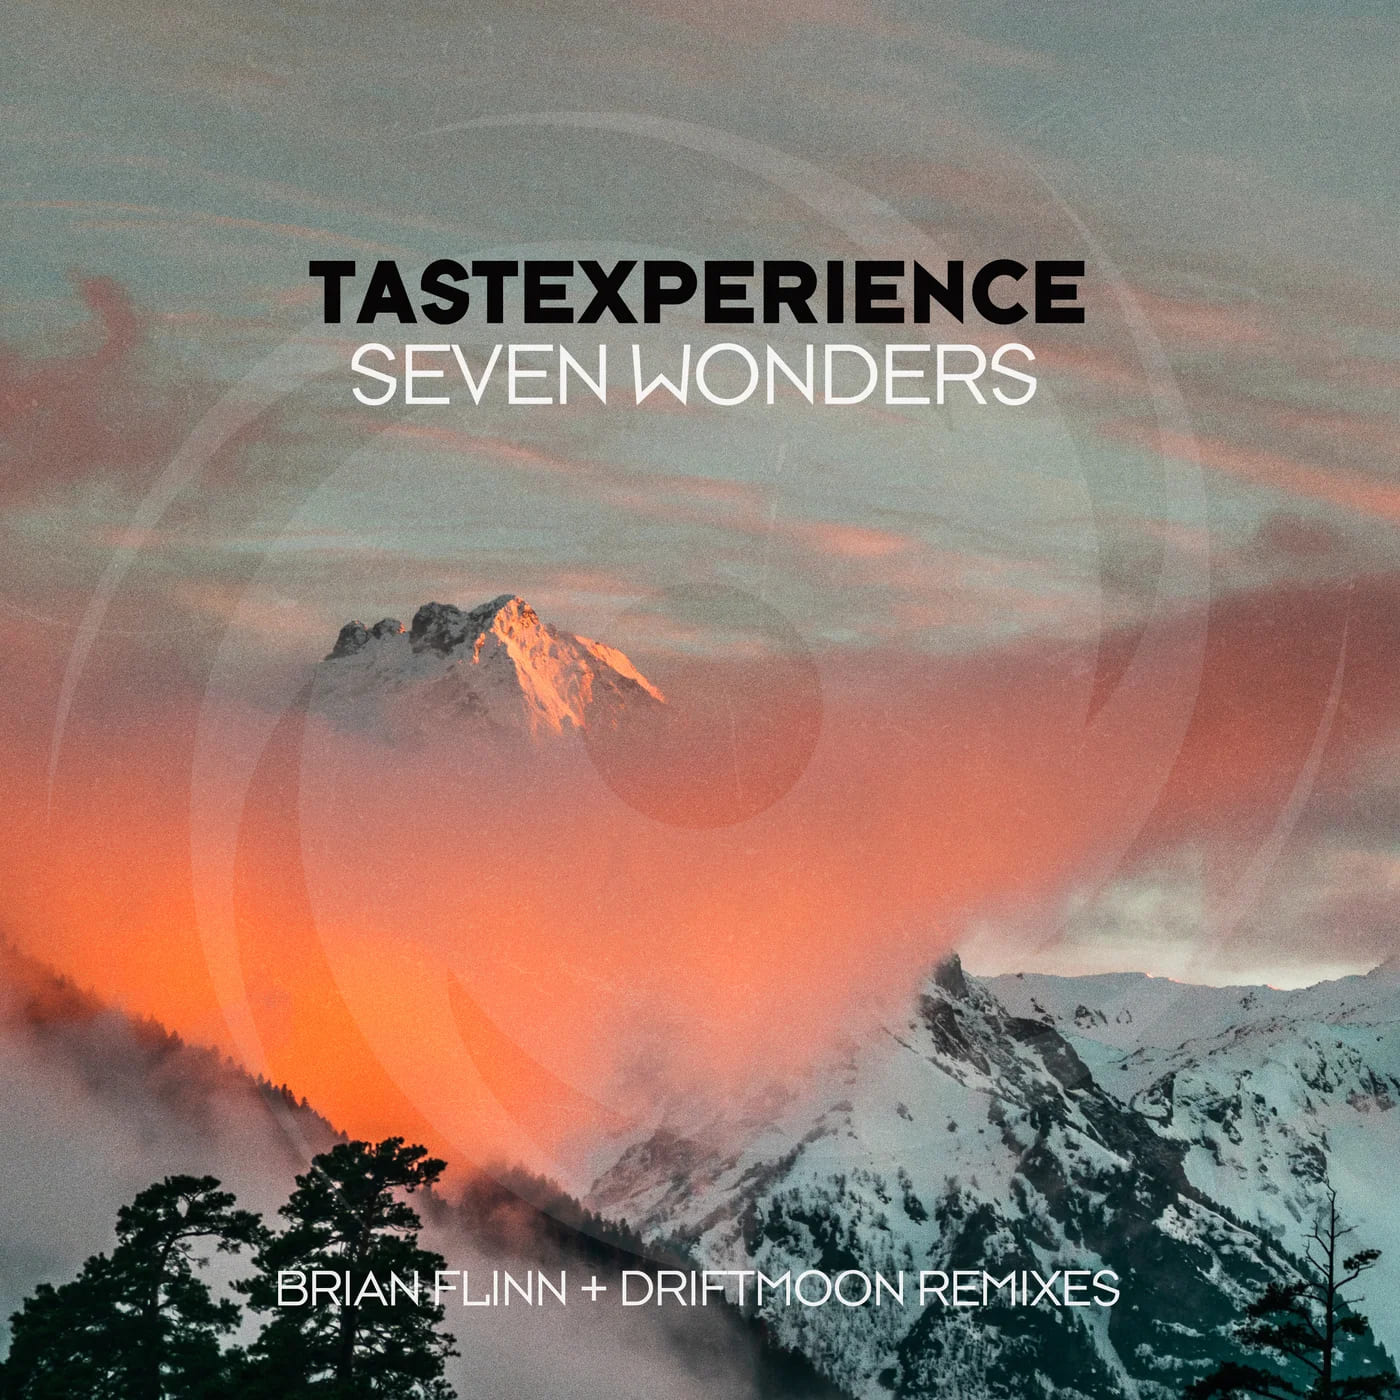 Tastexperience Feat. Sara Lones - Seven Wonders (Original Mix)